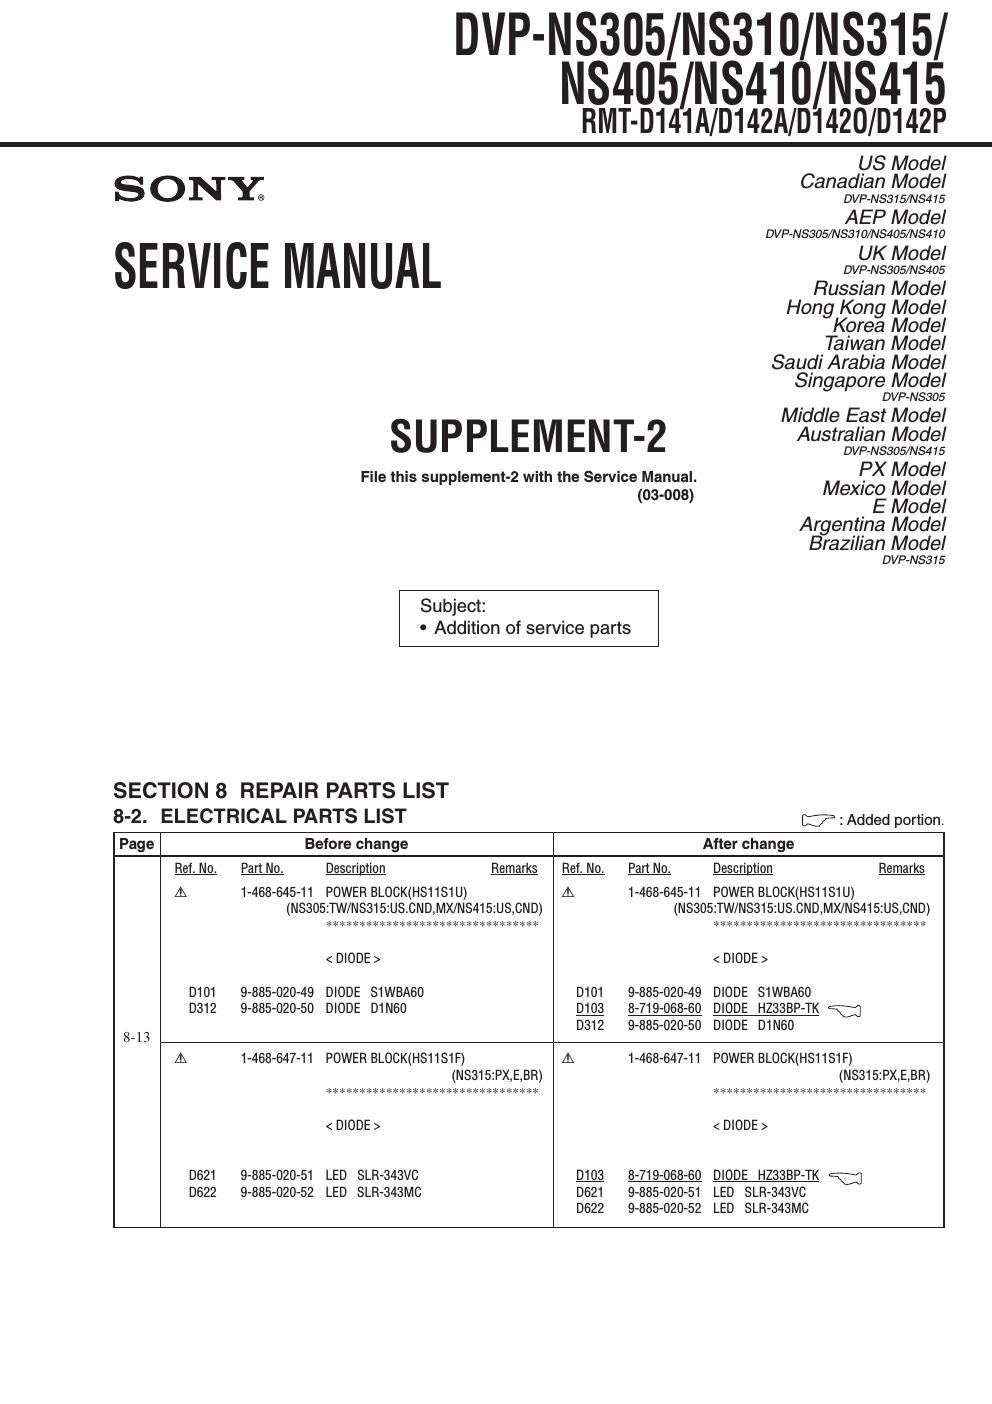 sony dvpns 405 service manual